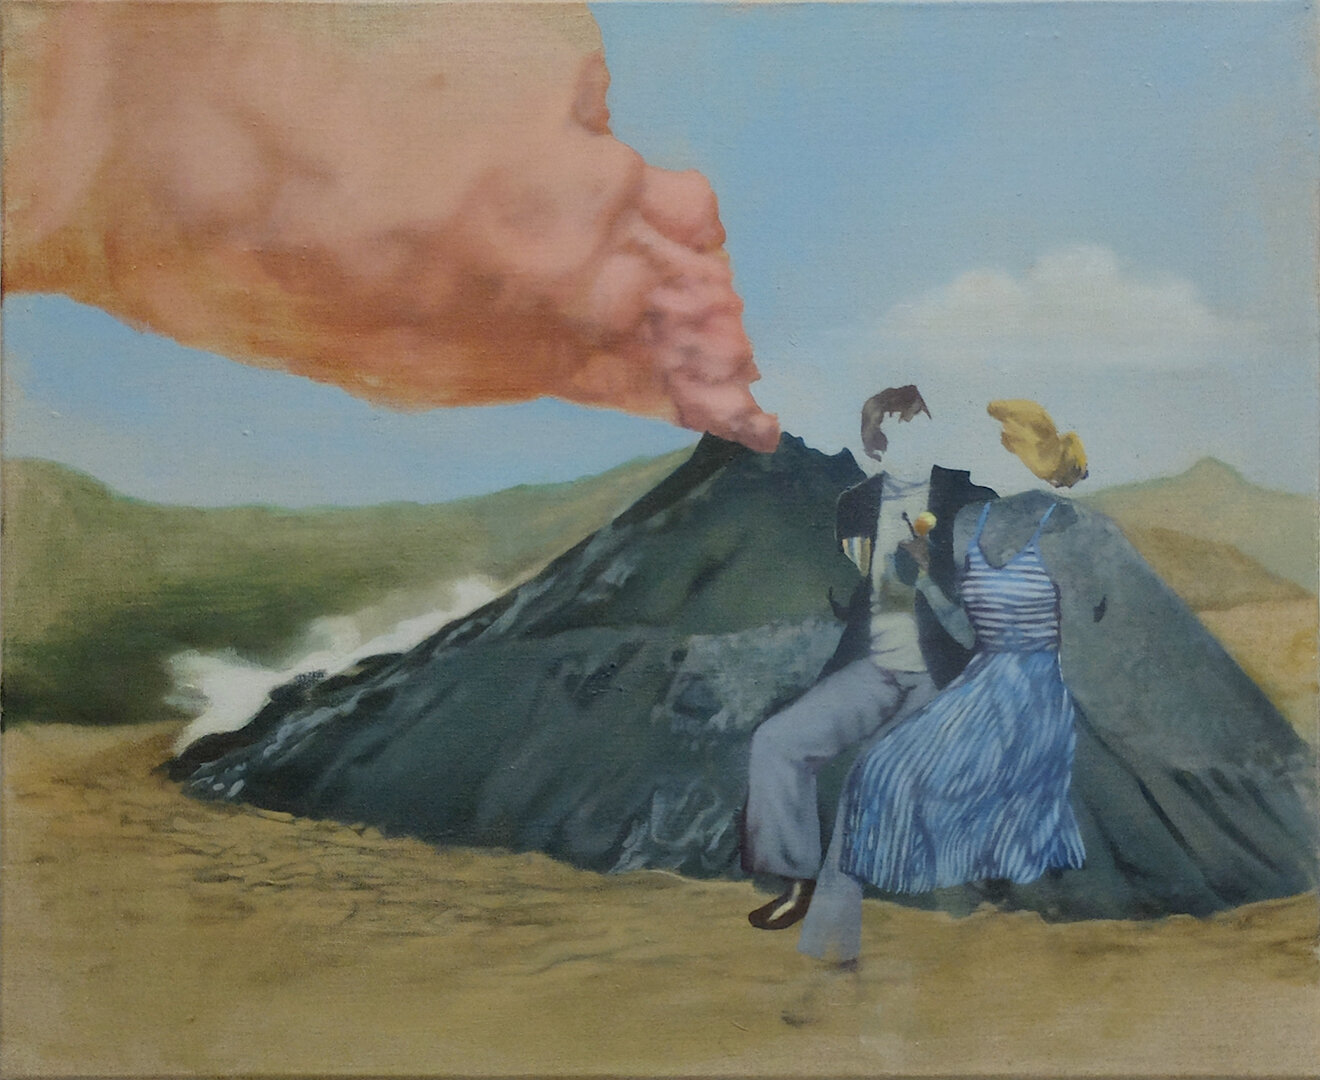 On the rocks. Oil on canvas. 60 x 51 cm. 2020